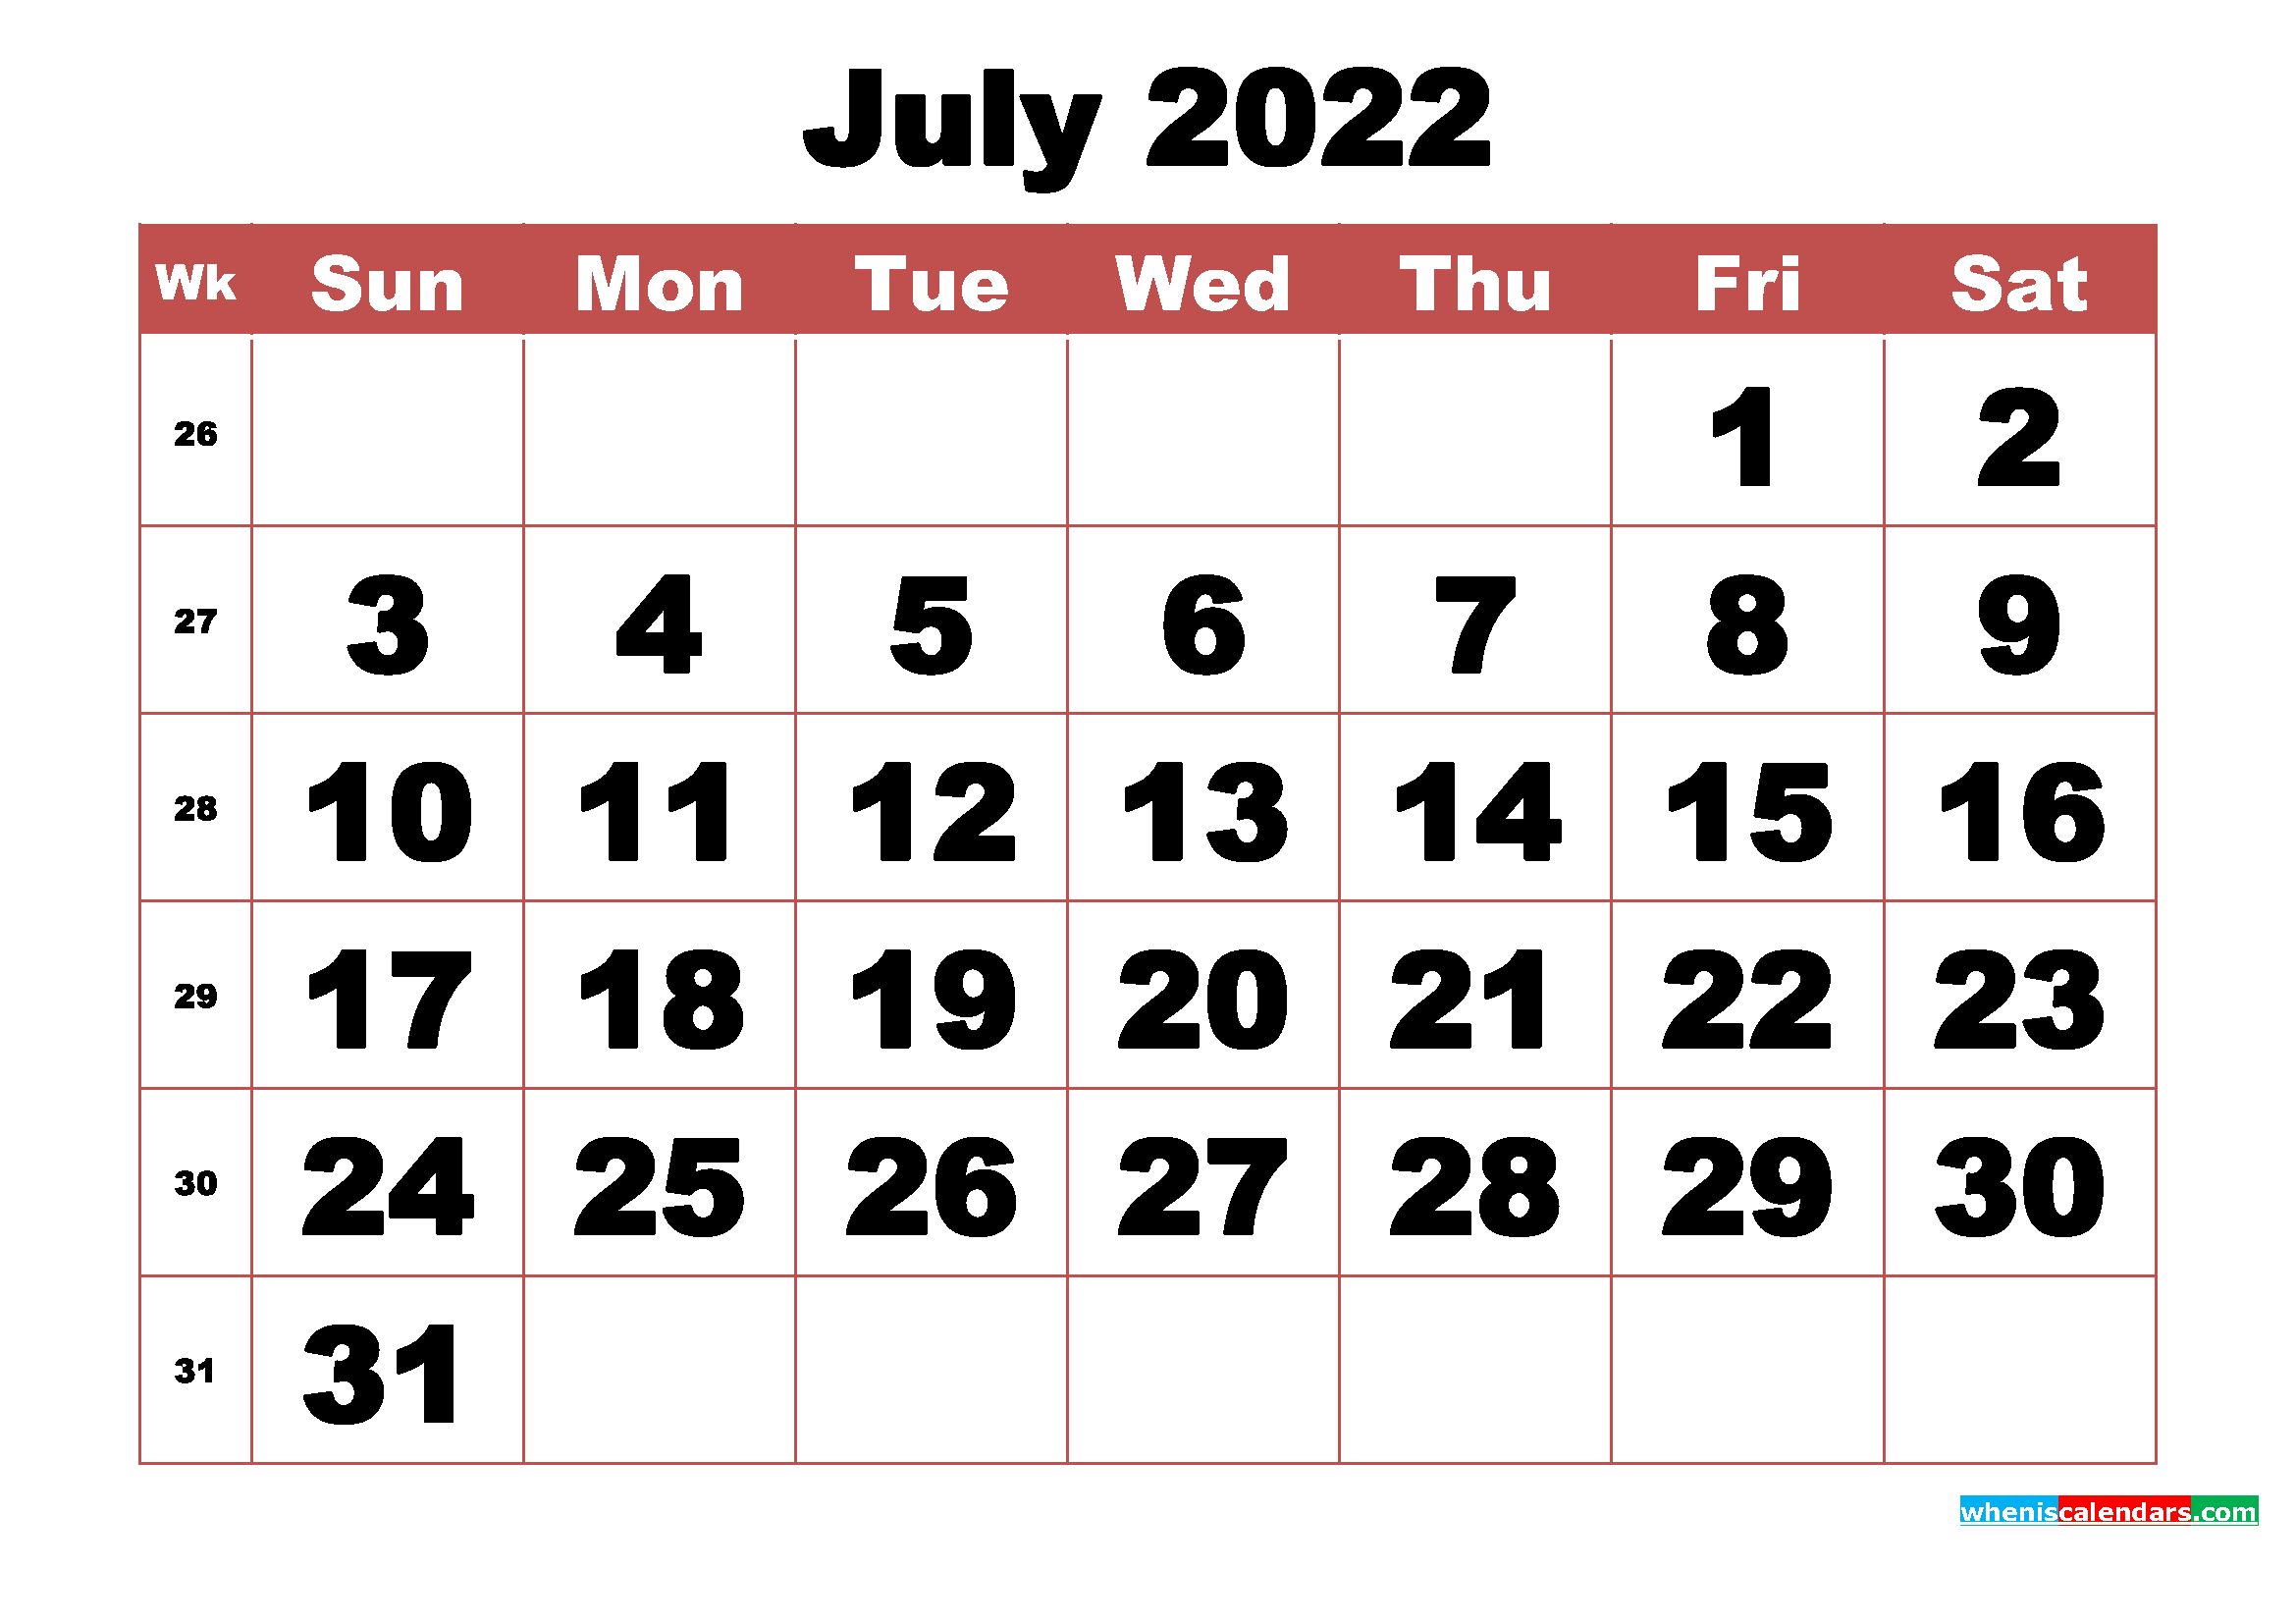 How Many Days Since 15 July 2022 PELAJARAN